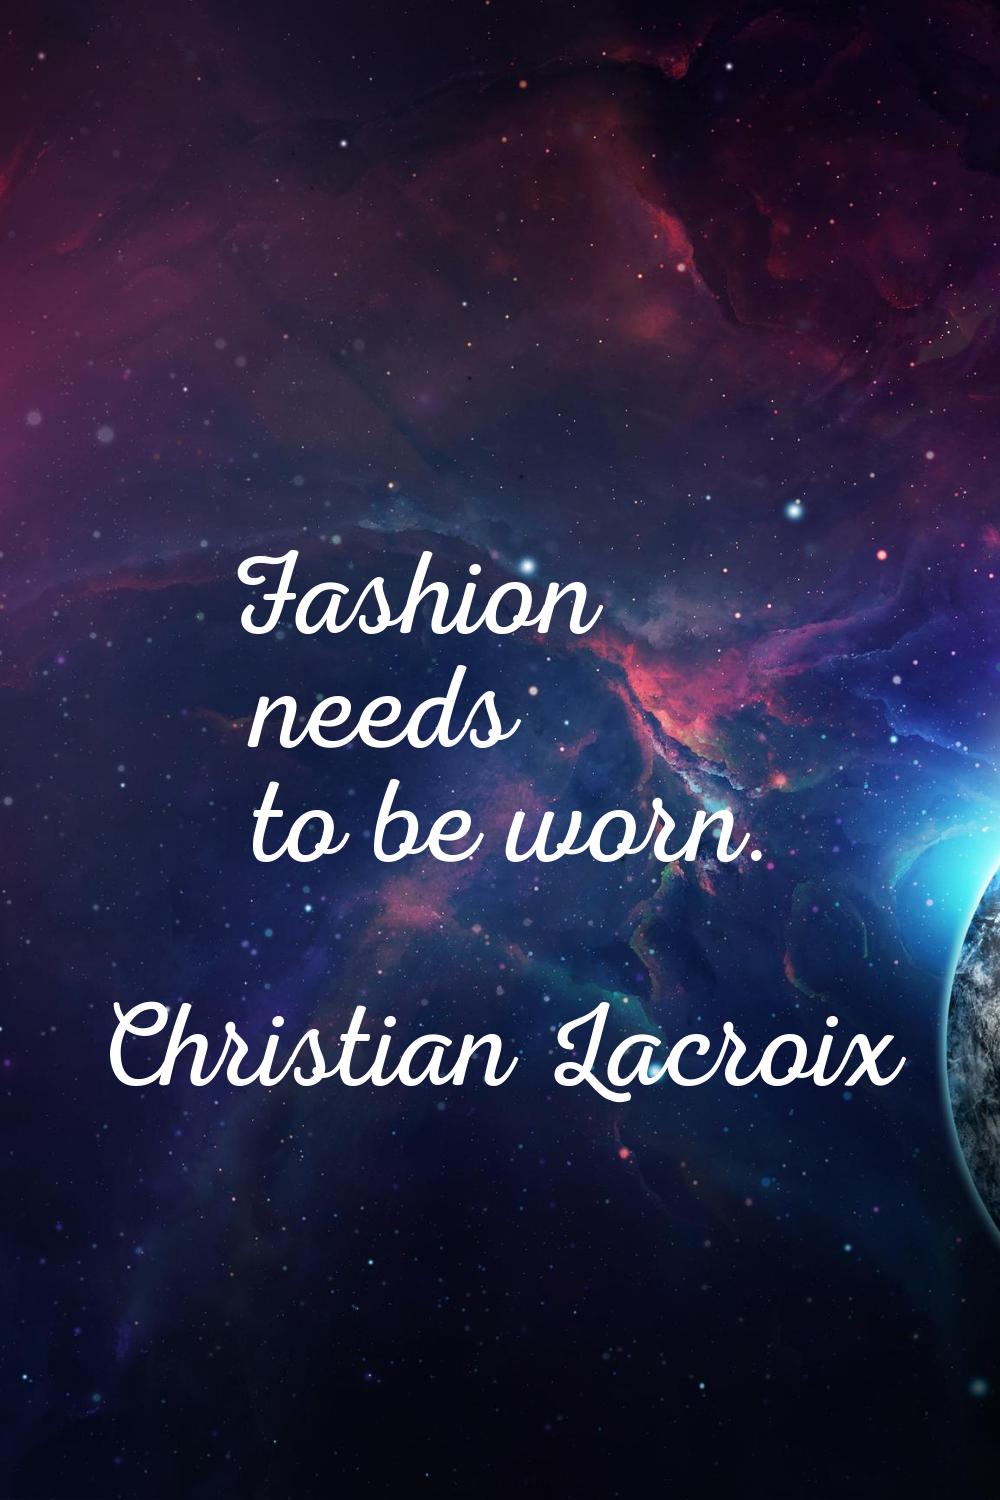 Fashion needs to be worn.